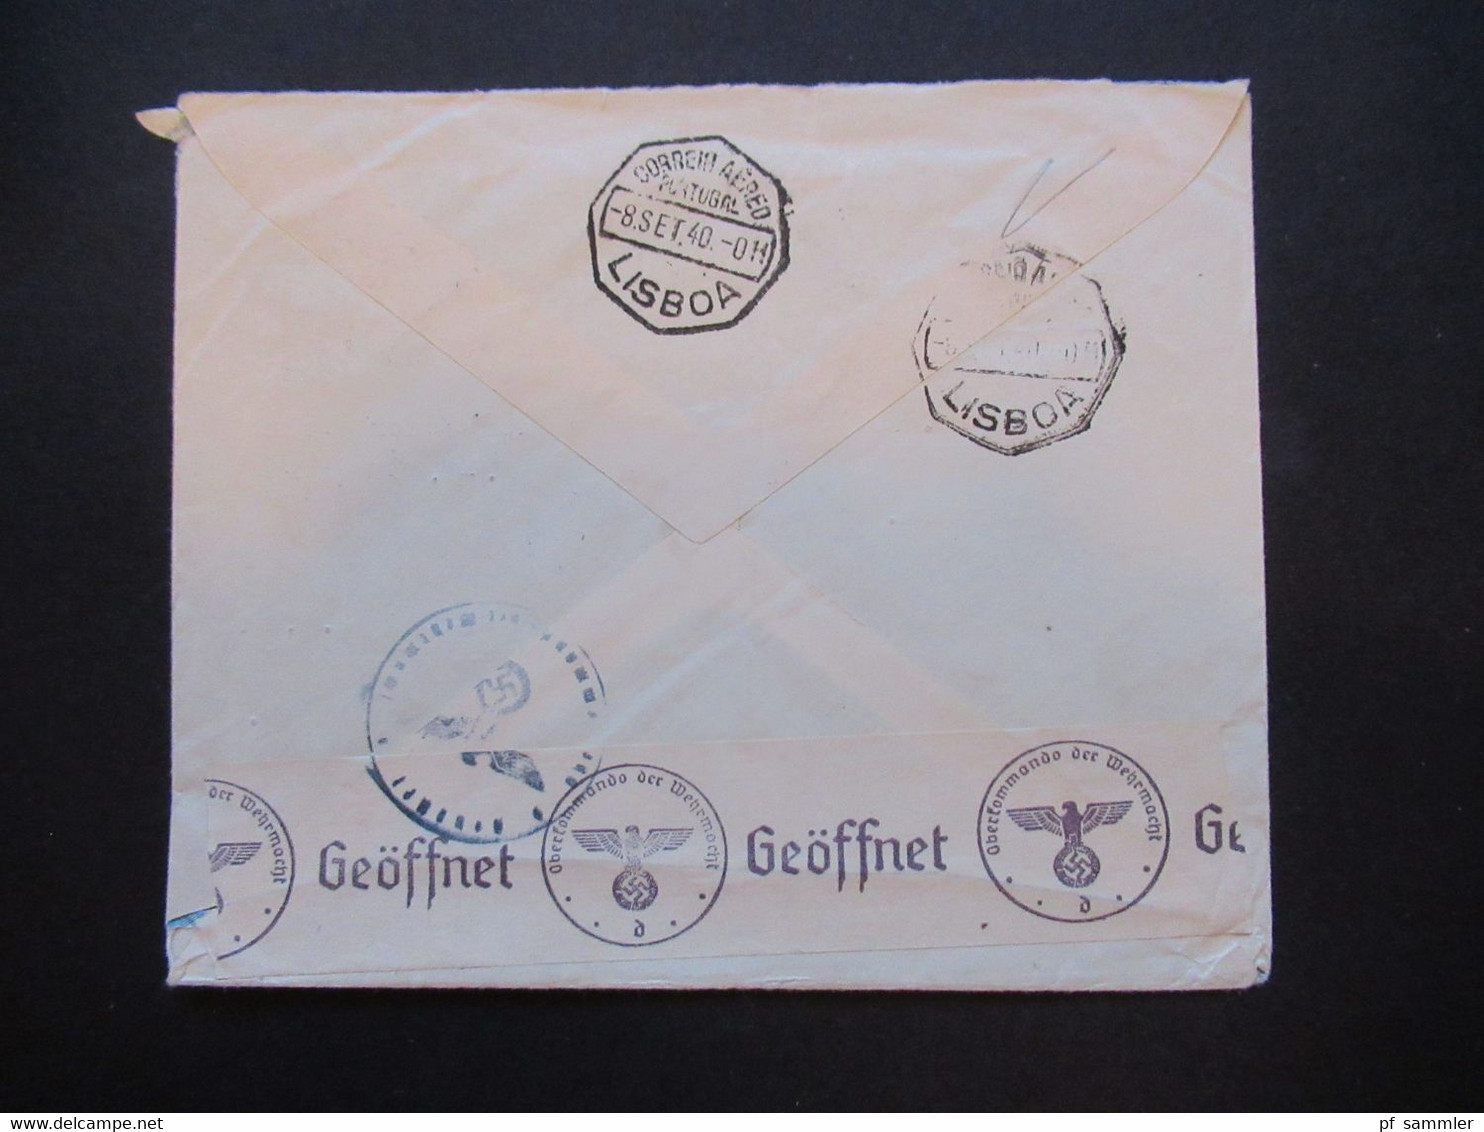 Portugal 1940 Zensurbeleg OKW Mehrfachzensur Umschlag Karl Loy Porto - Leipzig Flugpostmarke Nr. 592 (3) MiF